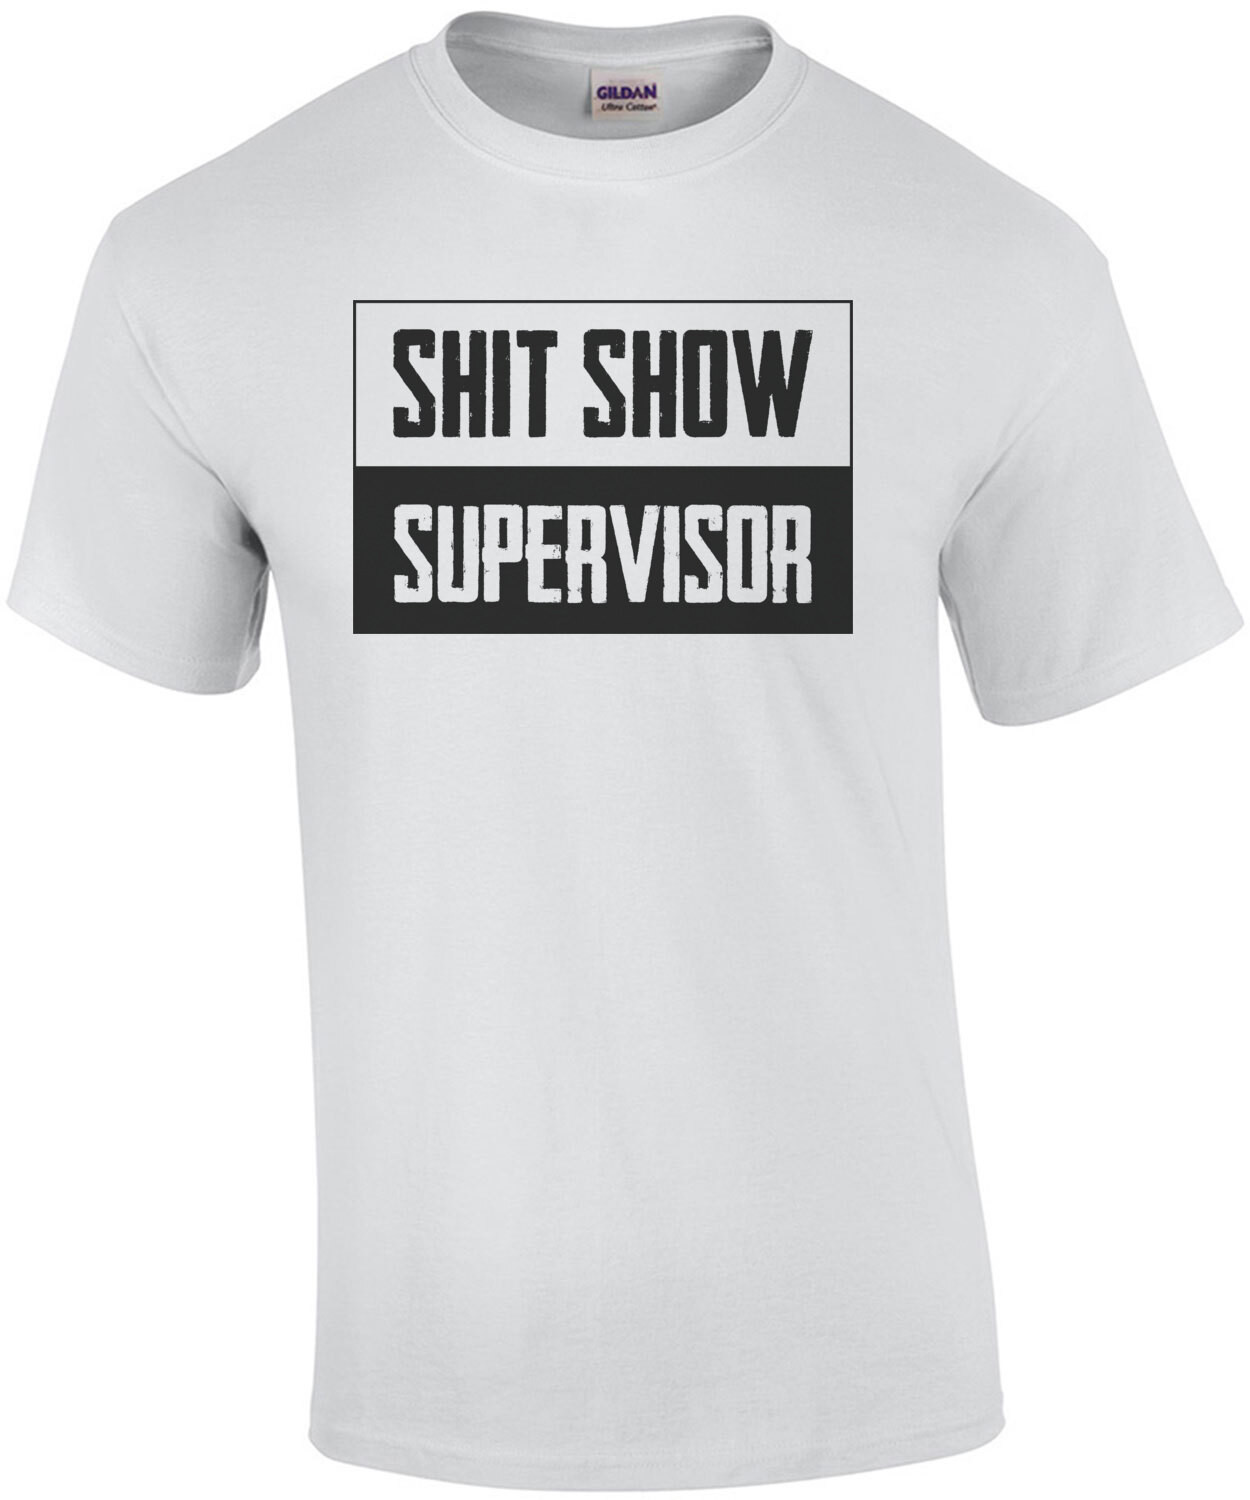 Shit Show Supervisor - funny t-shirt